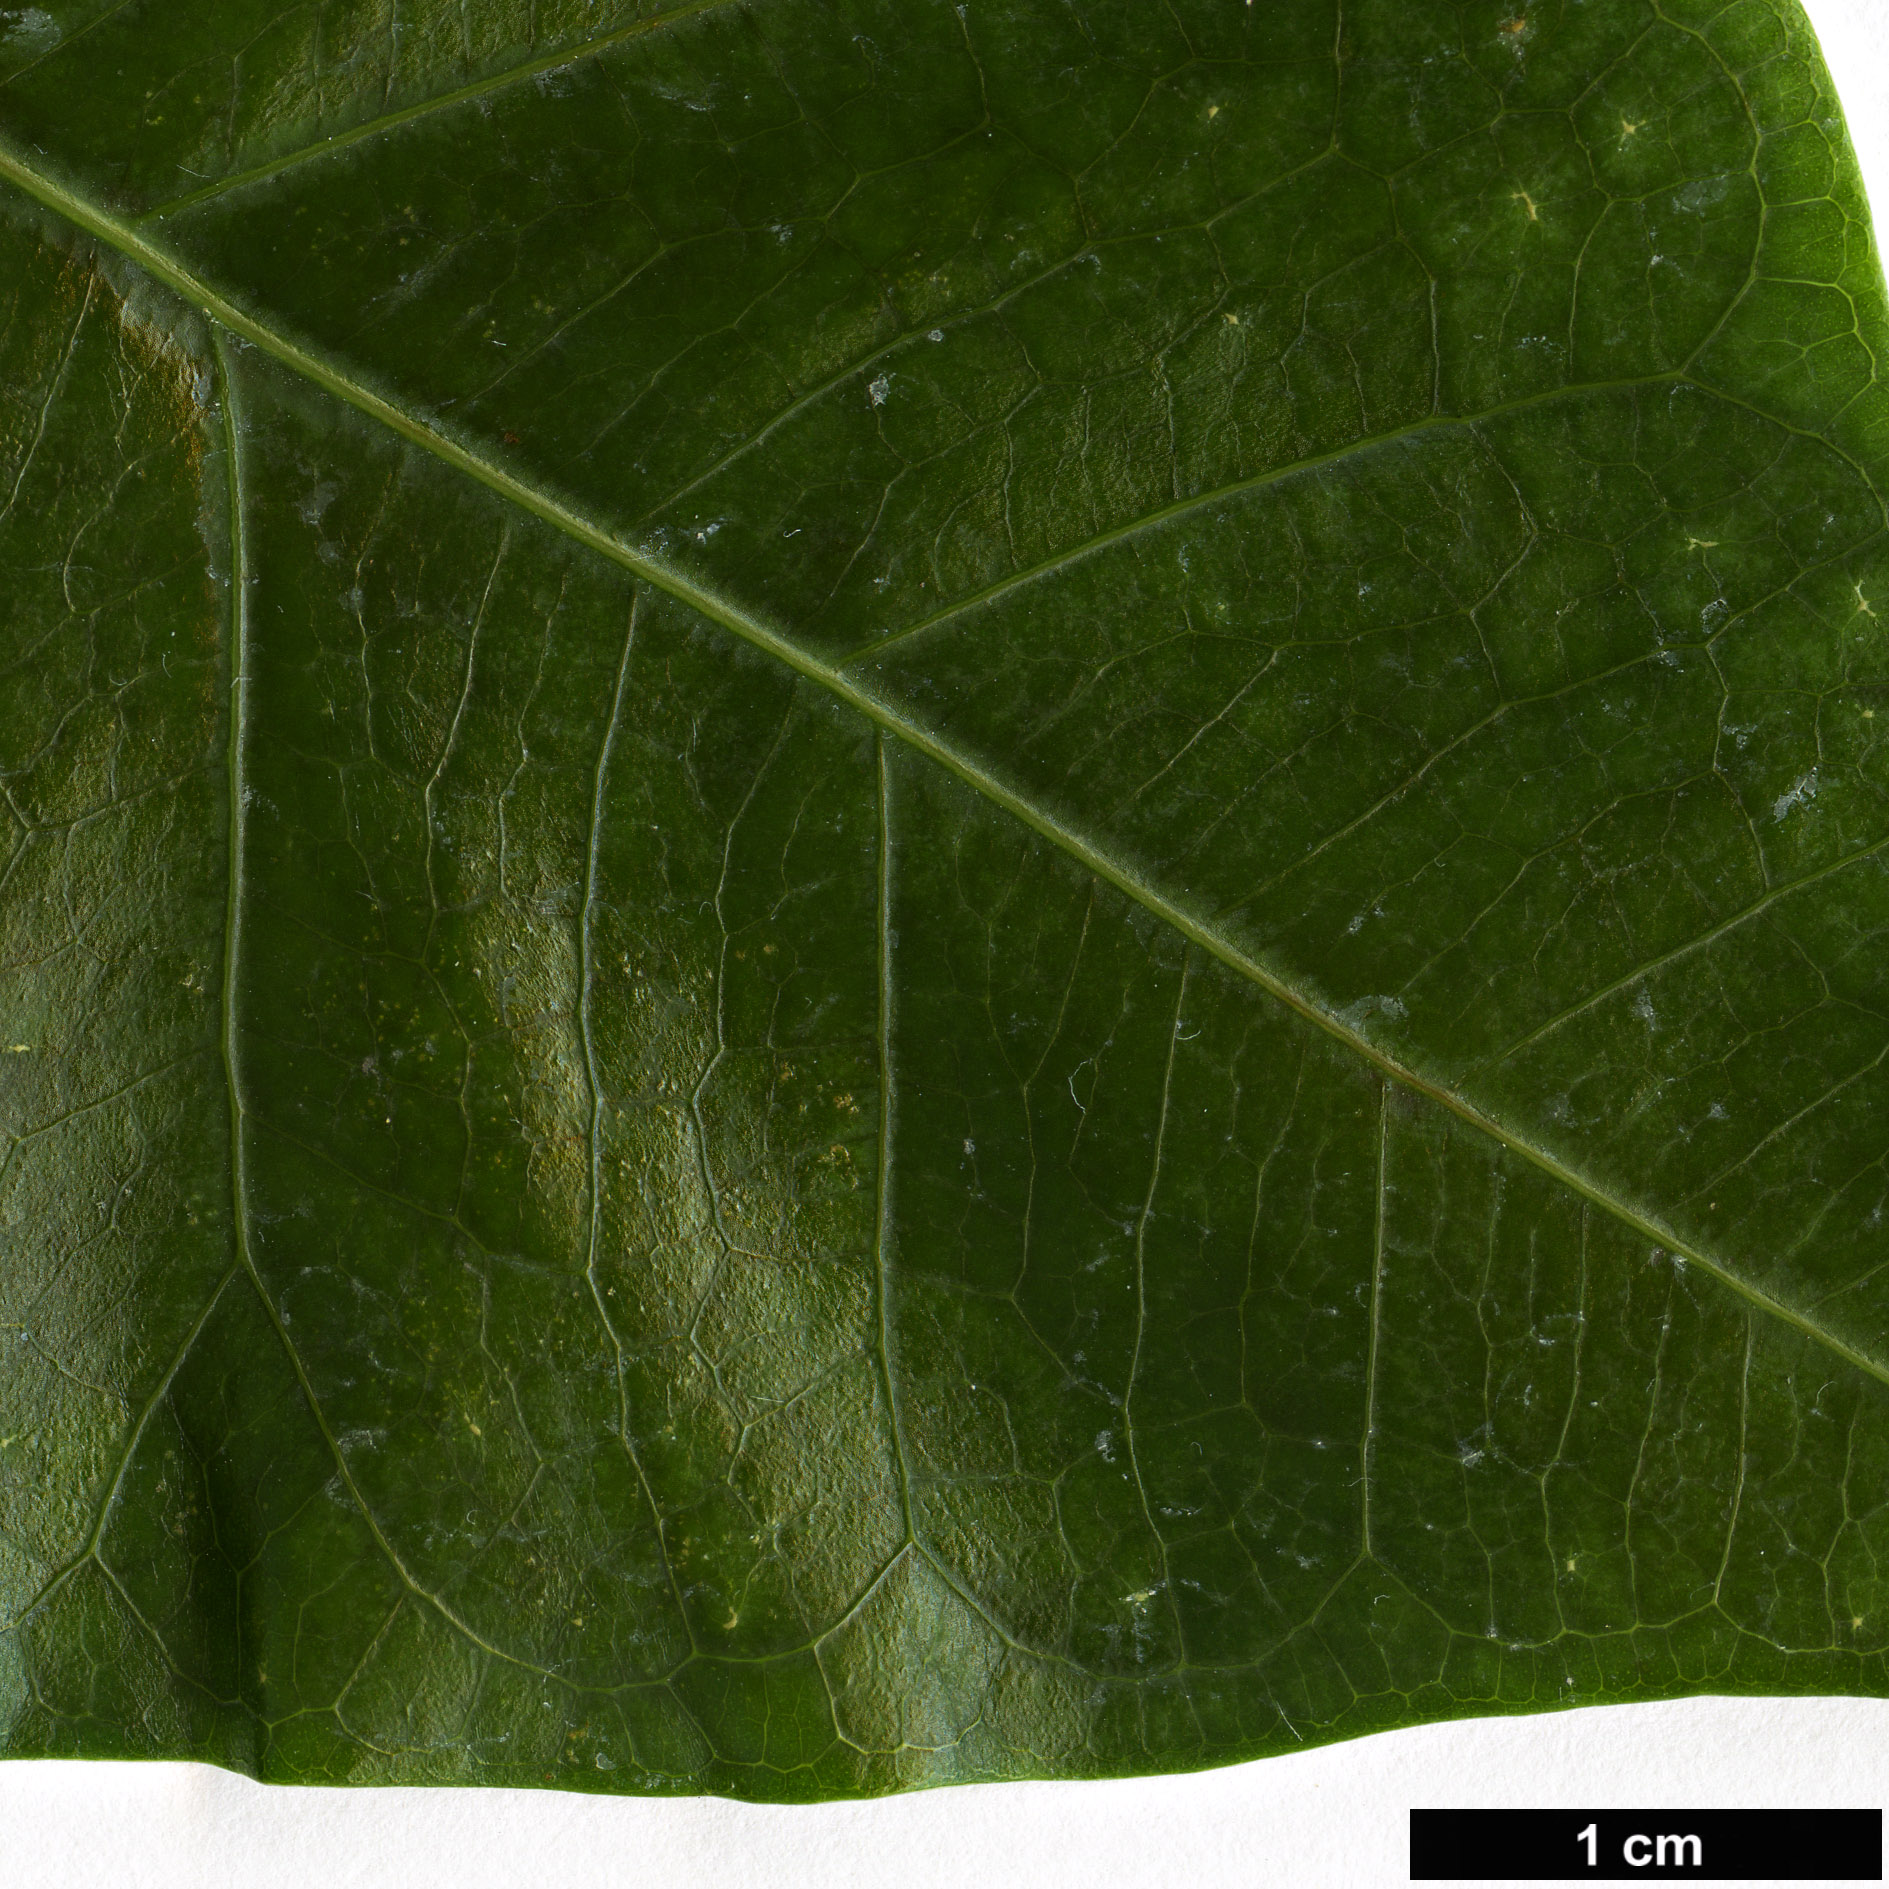 High resolution image: Family: Moraceae - Genus: Ficus - Taxon: religiosa